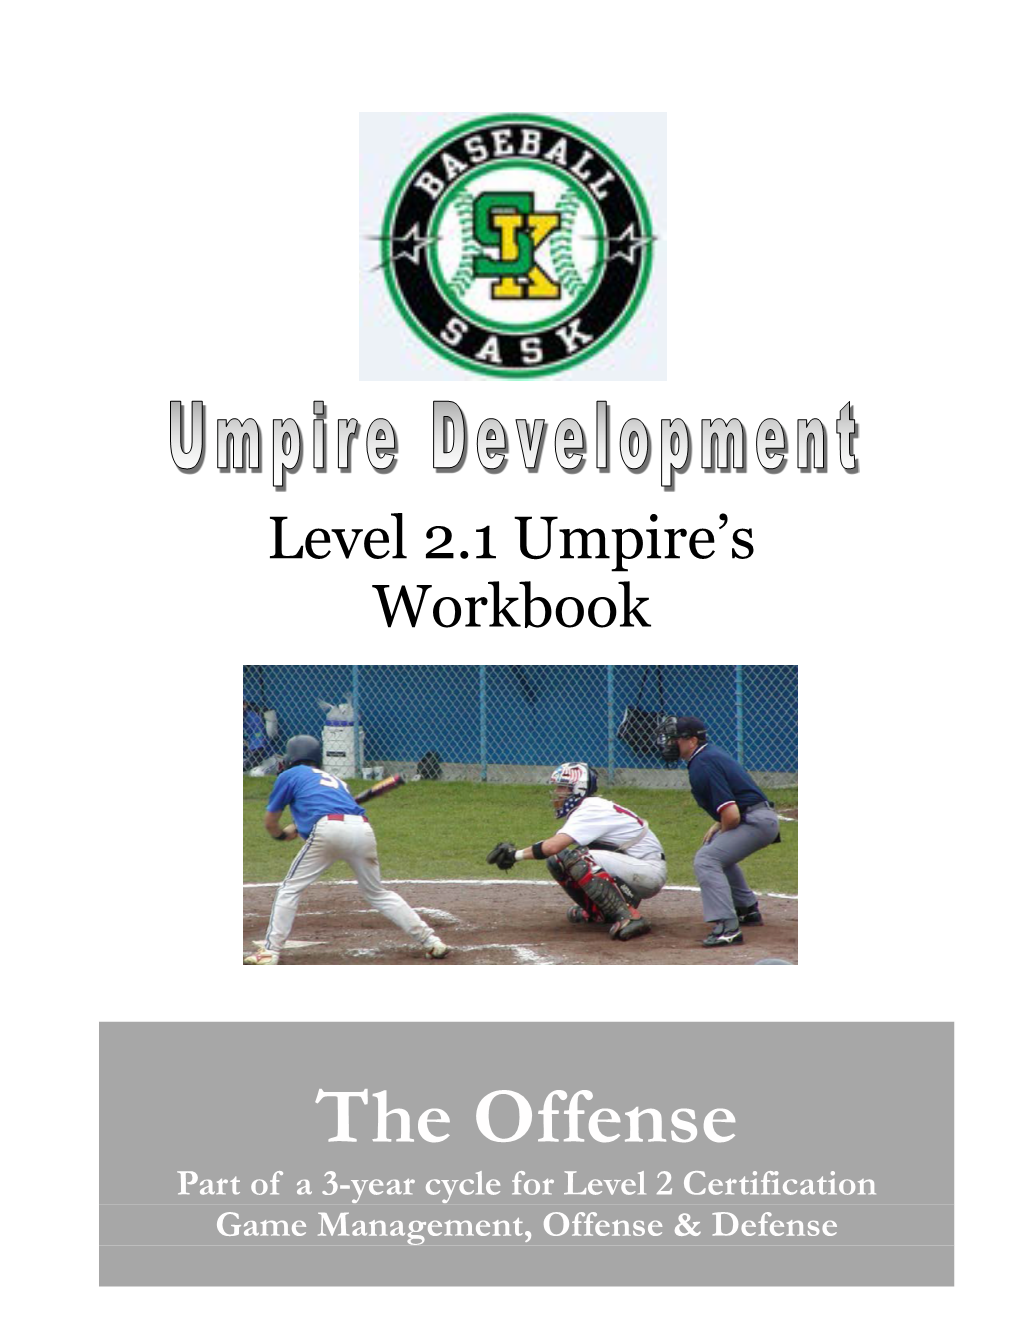 Level 2.1 Umpire's Workbook